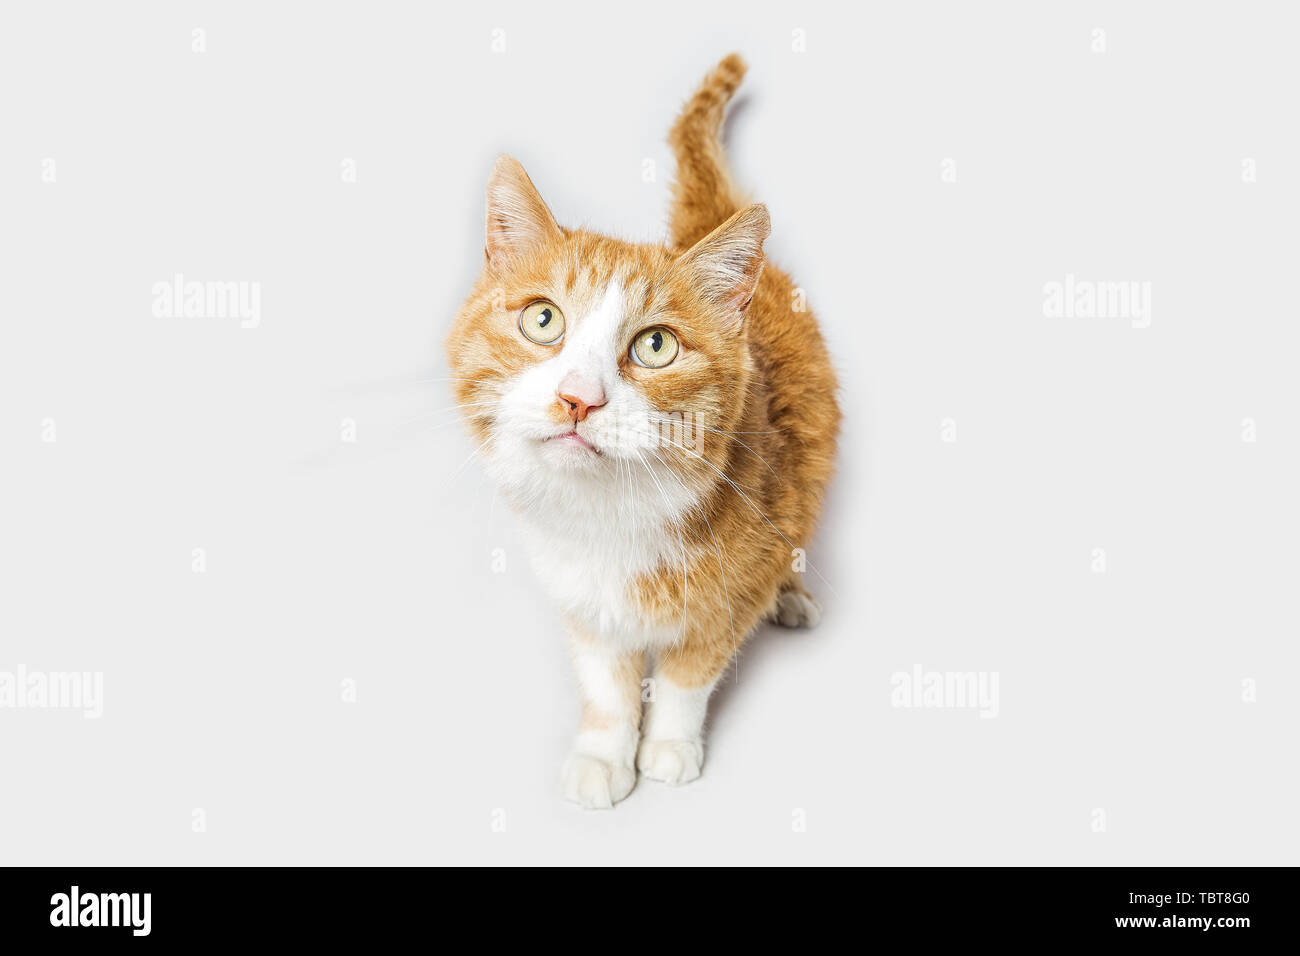 Kawaii kitten hi-res stock photography and images - Alamy